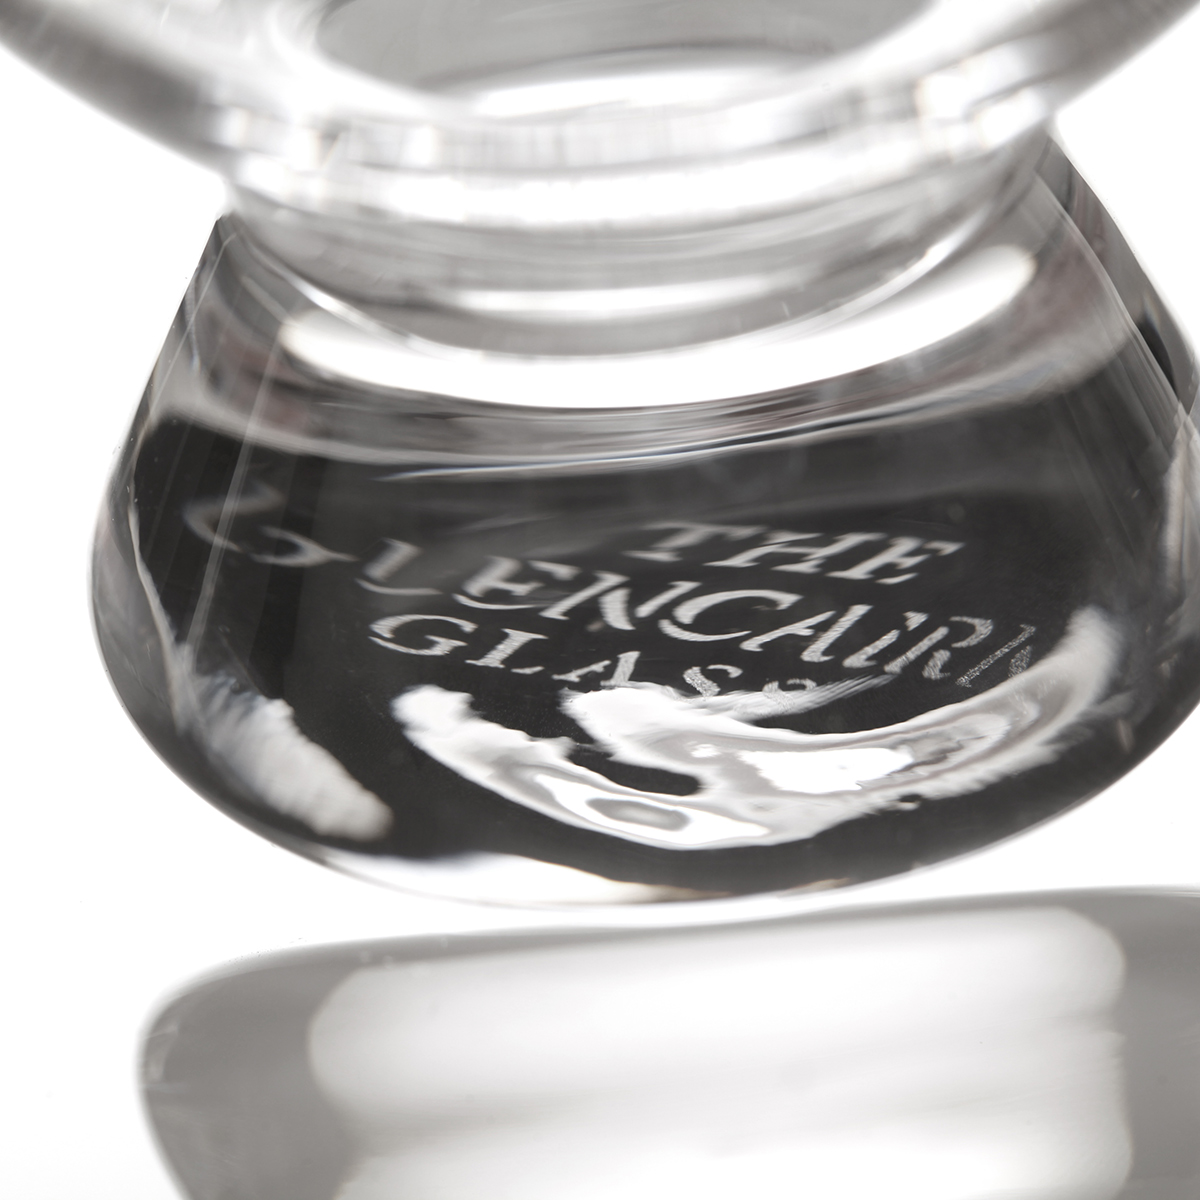 Glencairn Whisky Tasting Glas - Der Klassiker aus Schottland